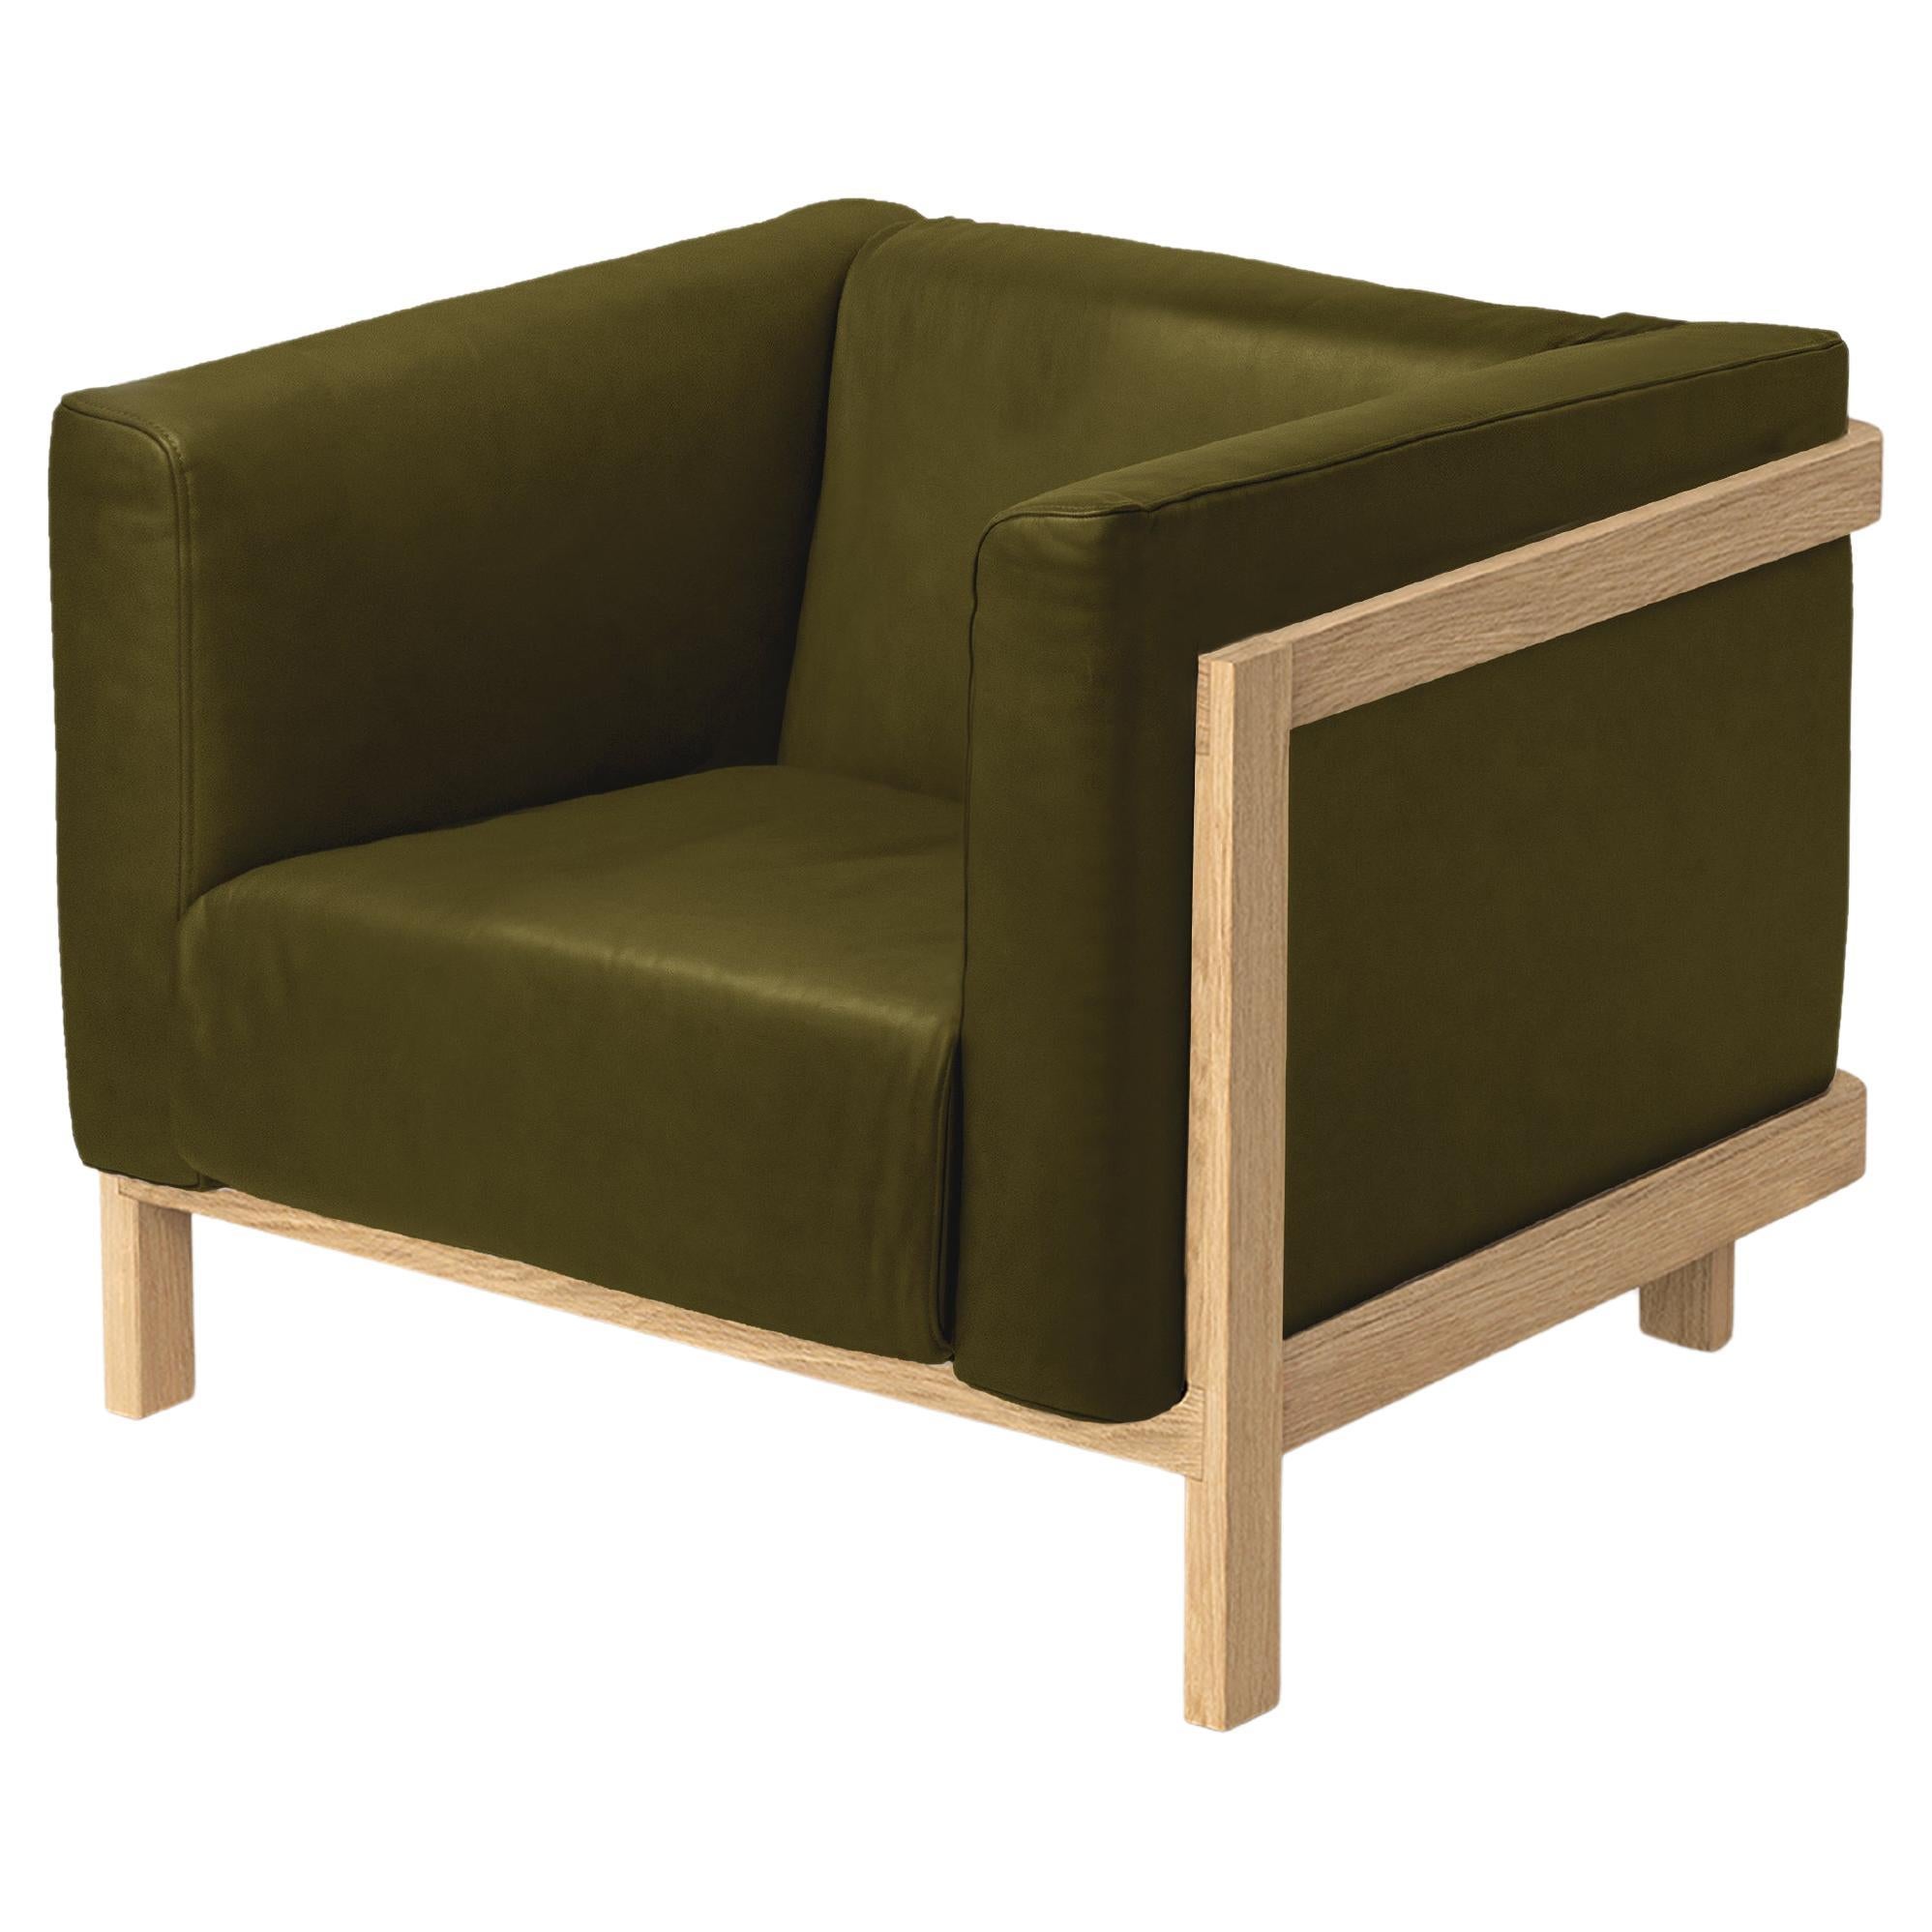 Minimalist one seater sofa oak - leather upholstered